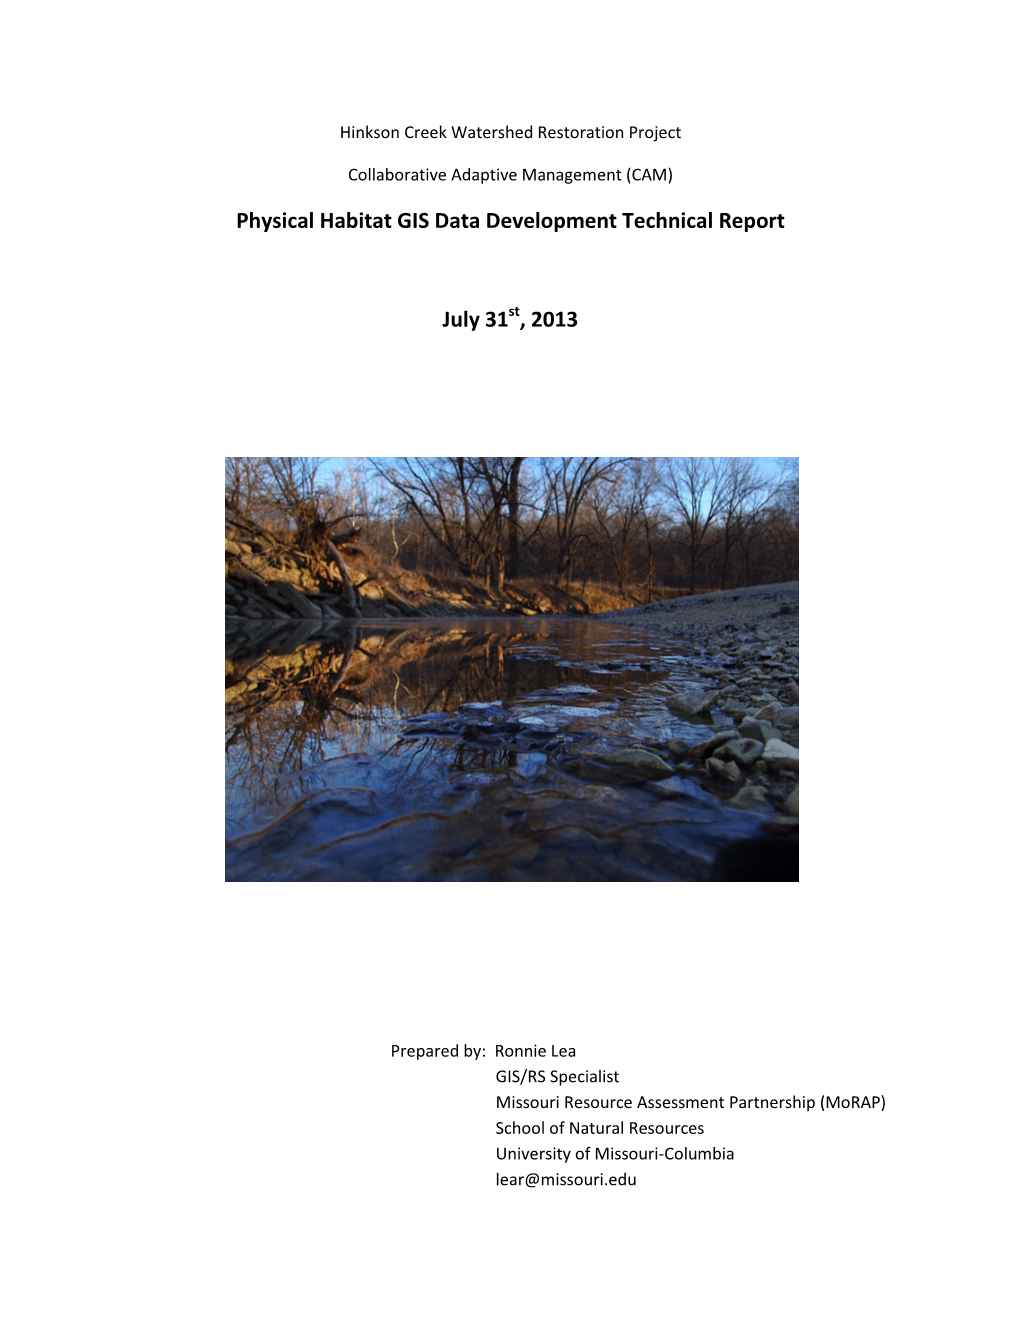 Physical Habitat GIS Data Development Technical Report July 31St, 2013